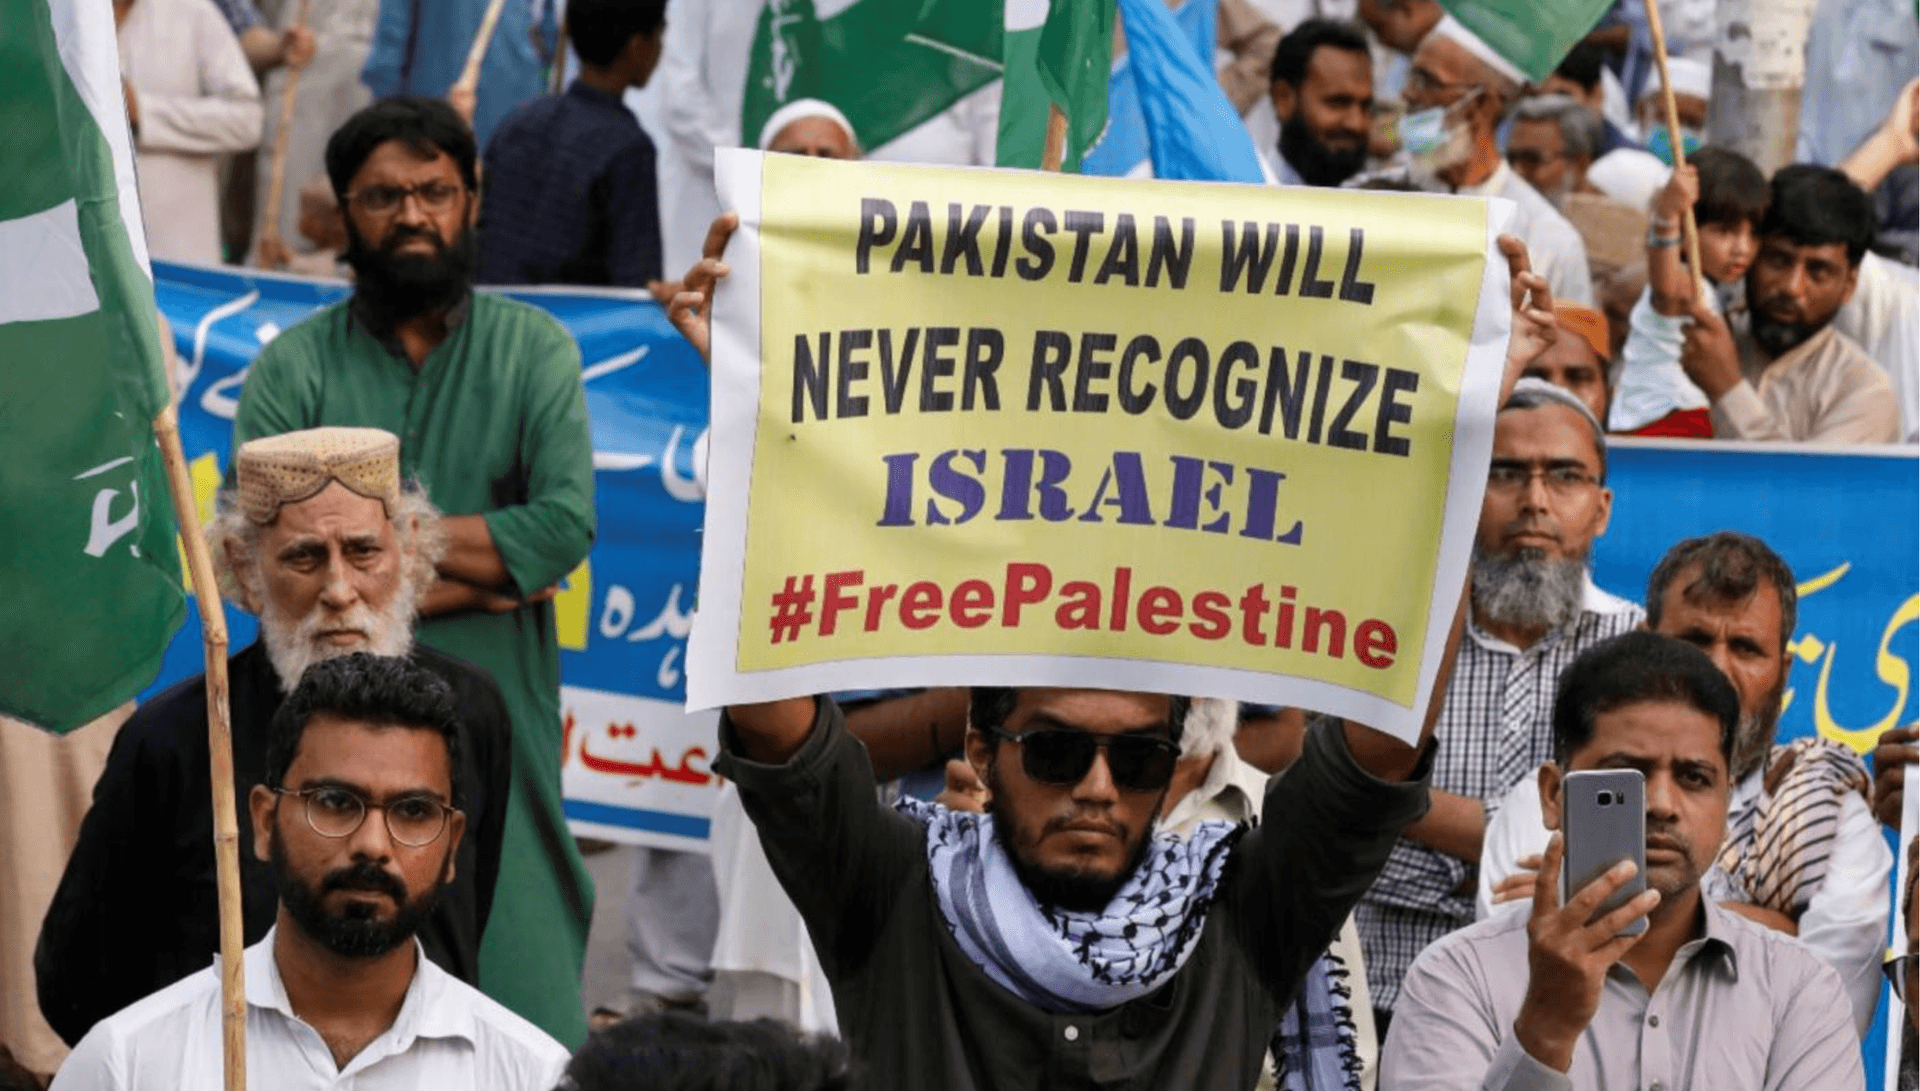 Pakistan's "No Diplomacy" approach towards Israel